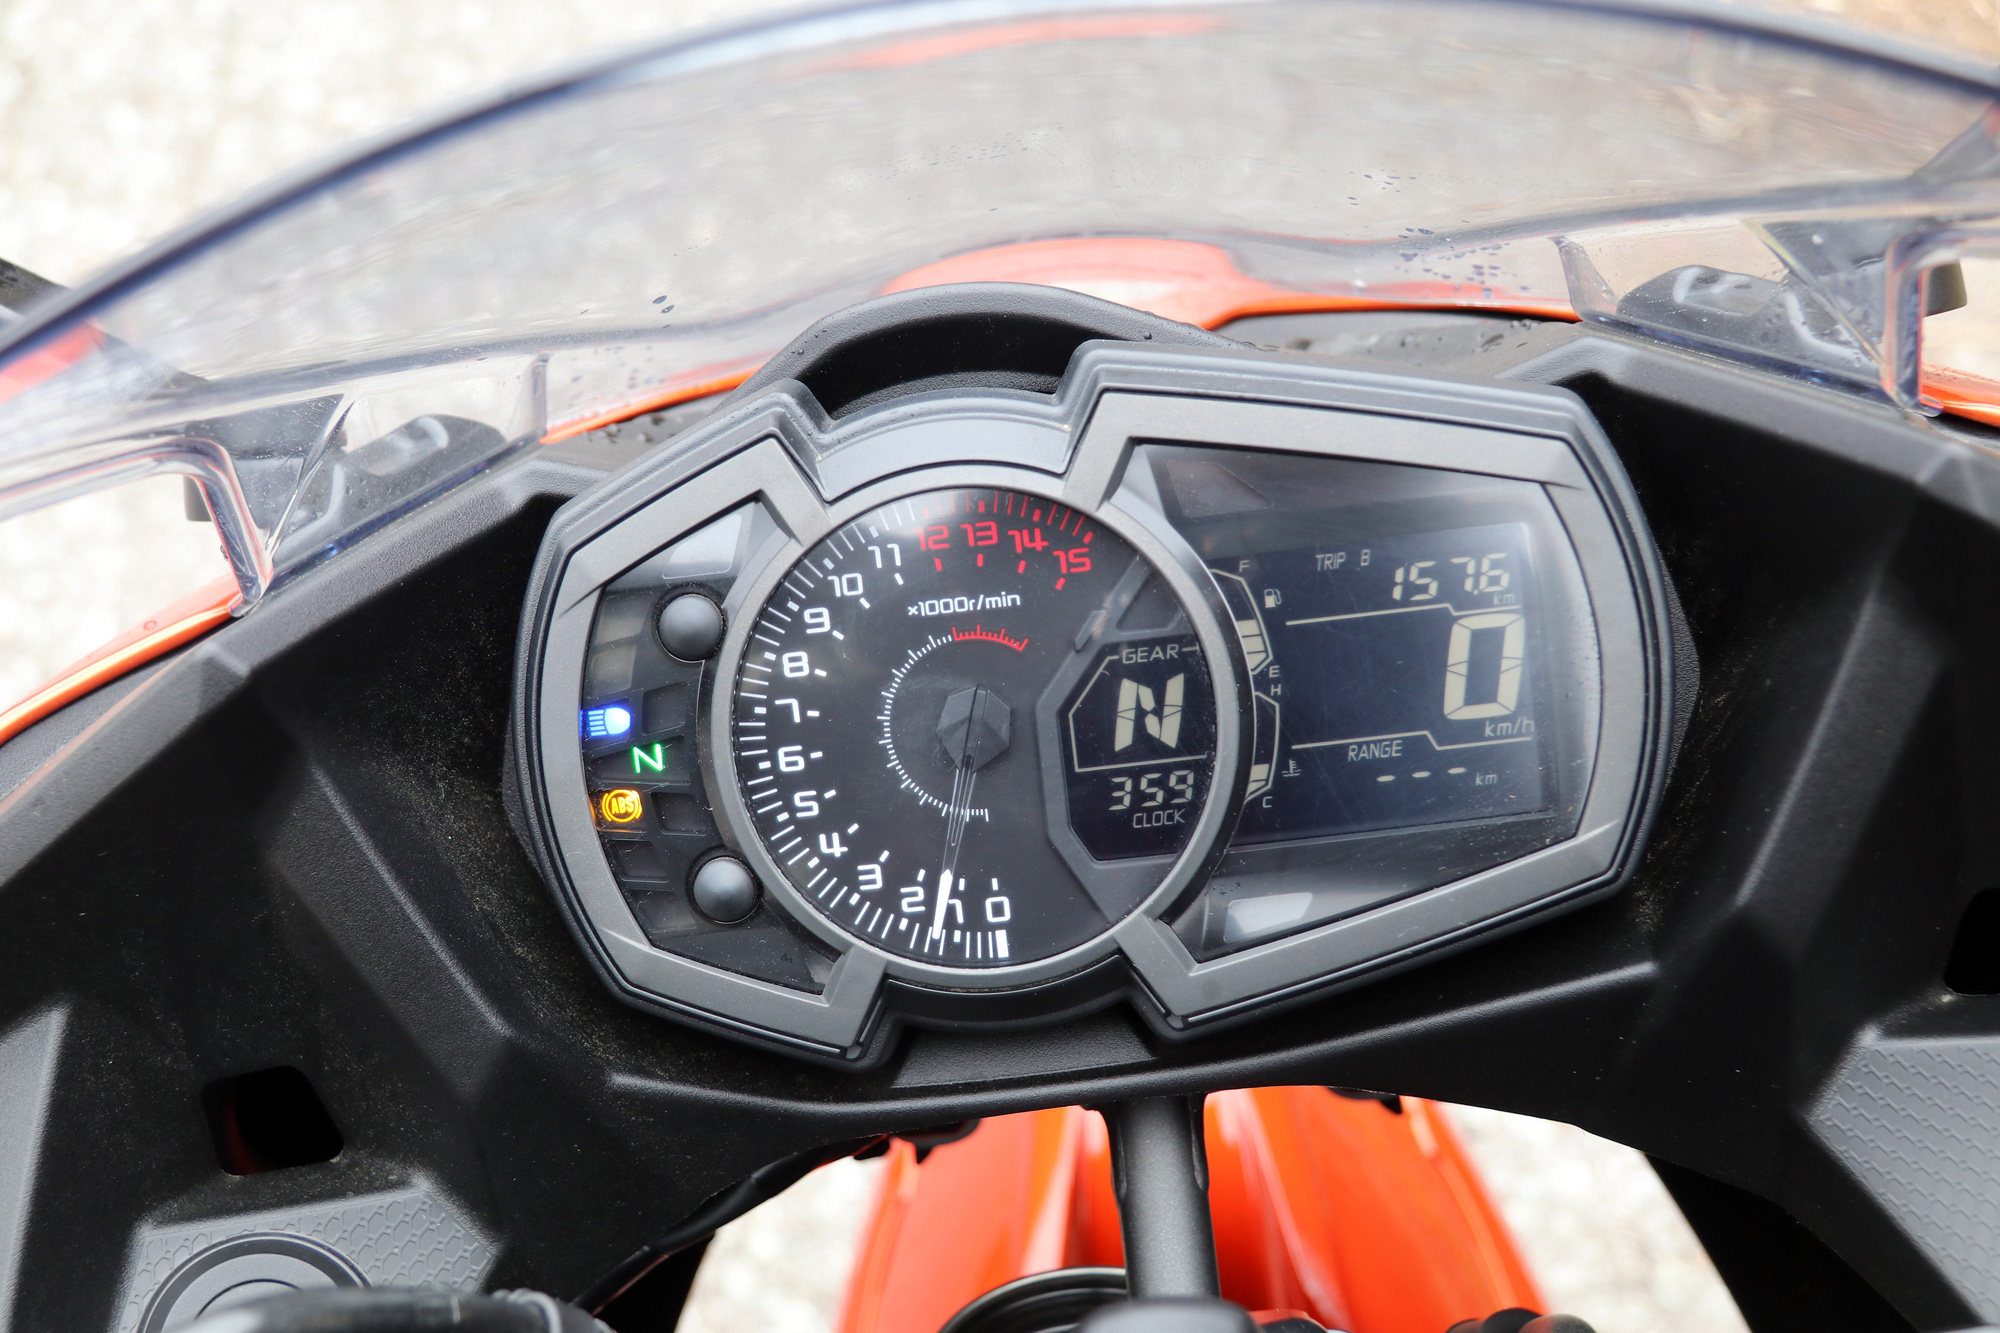 Ninja 400を1 000km試乗 ツーリングバイクとしてのポテンシャルも高い 試乗 車両解説 カワサキイチバン